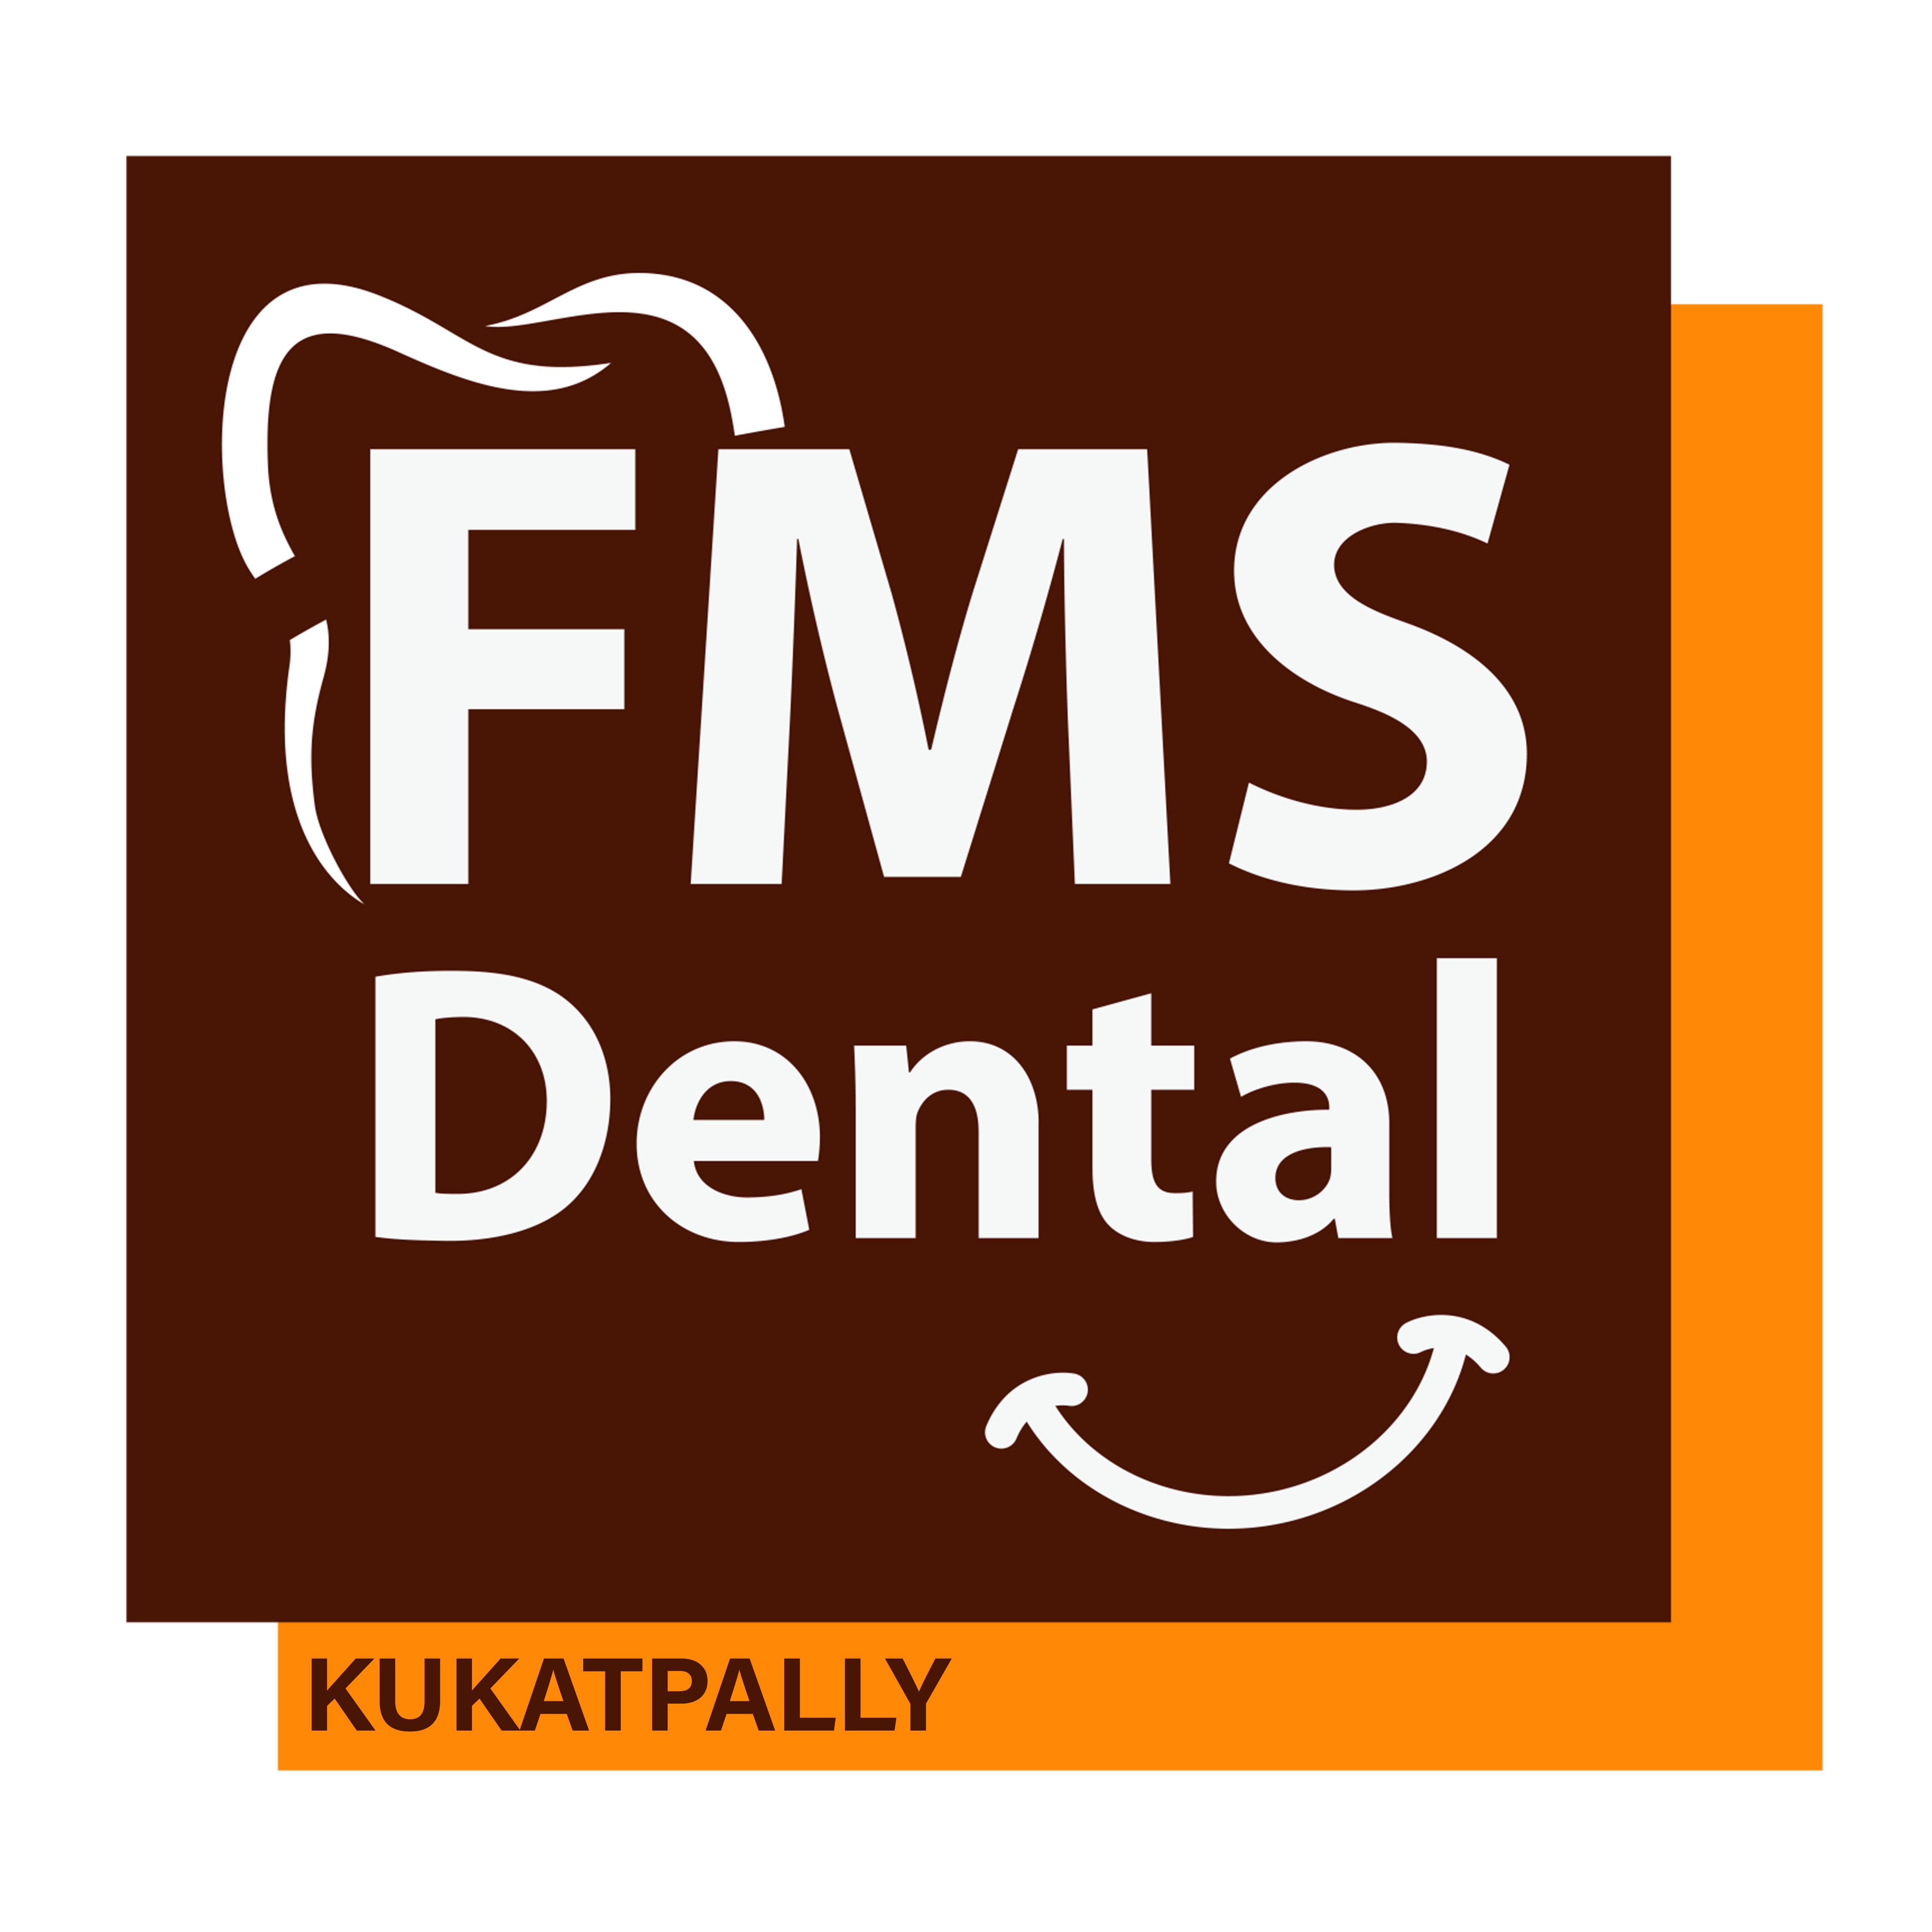 FMS DENTAL Madinaguda|Veterinary|Medical Services